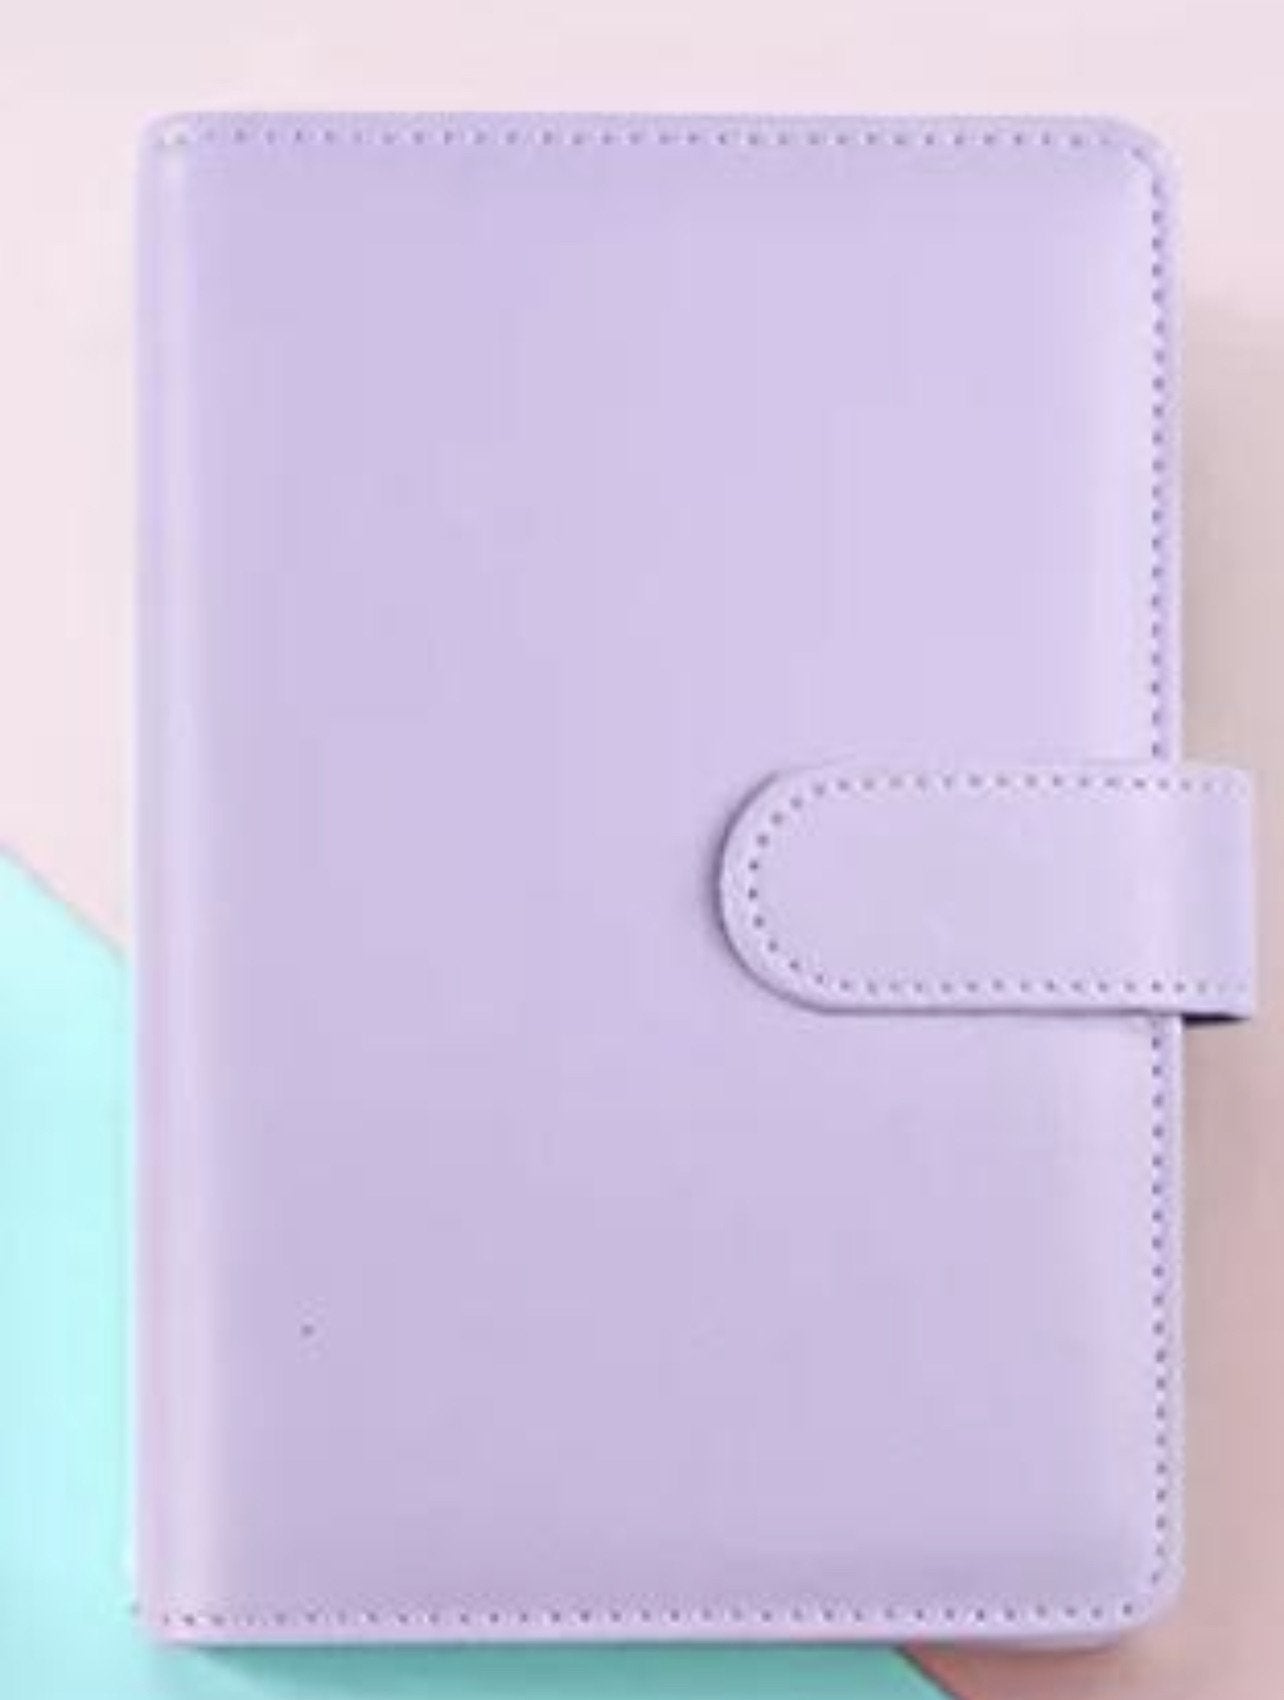 Offer A6 Folder/ Budget binder New Colours Added*